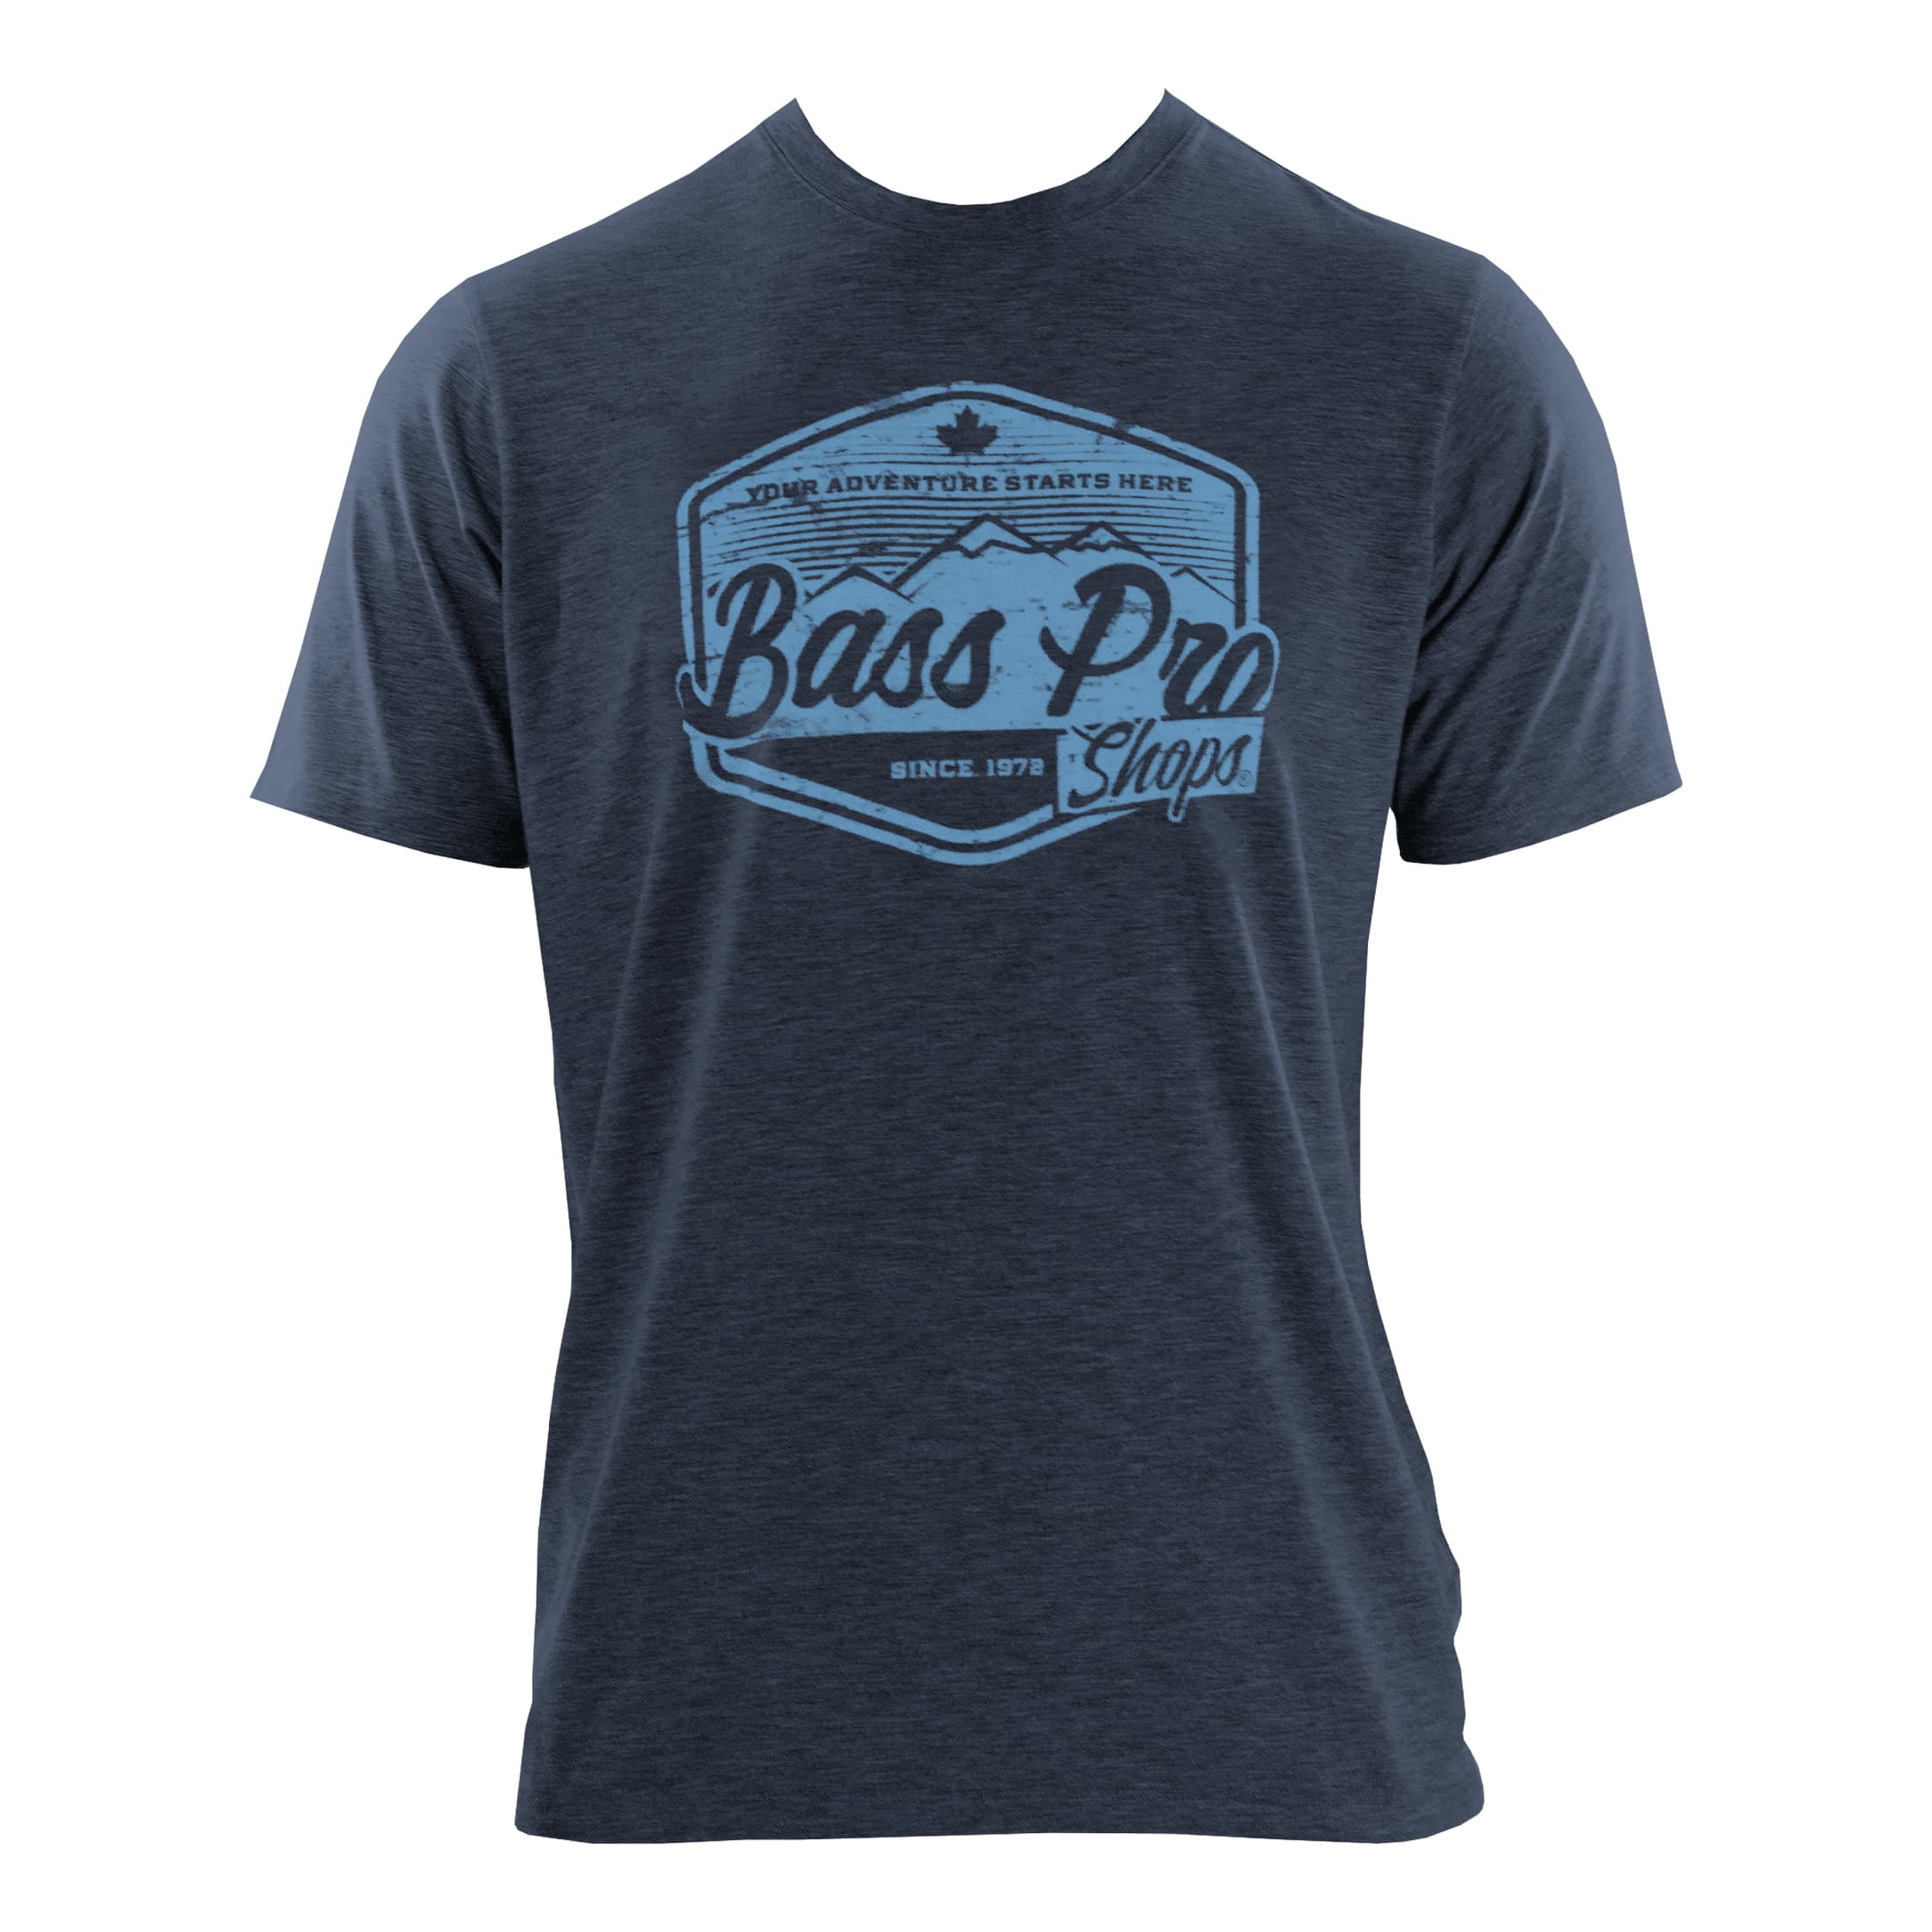 Bass Pro Shops Boats and Bass Short-Sleeve T-Shirt for Men